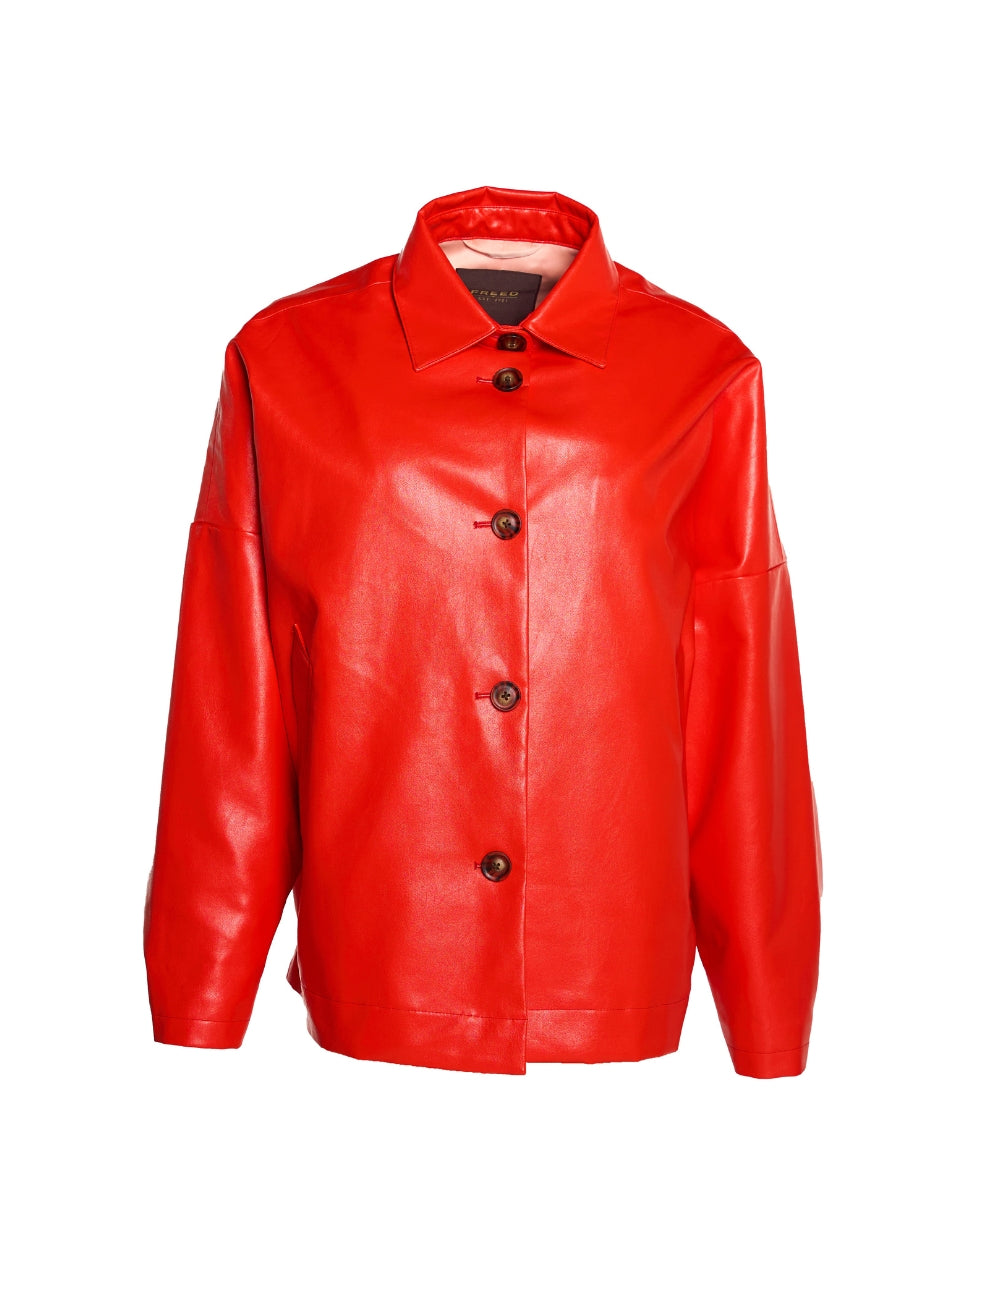 FREED ryder coat red tart vegan leather zero waste outerwear 